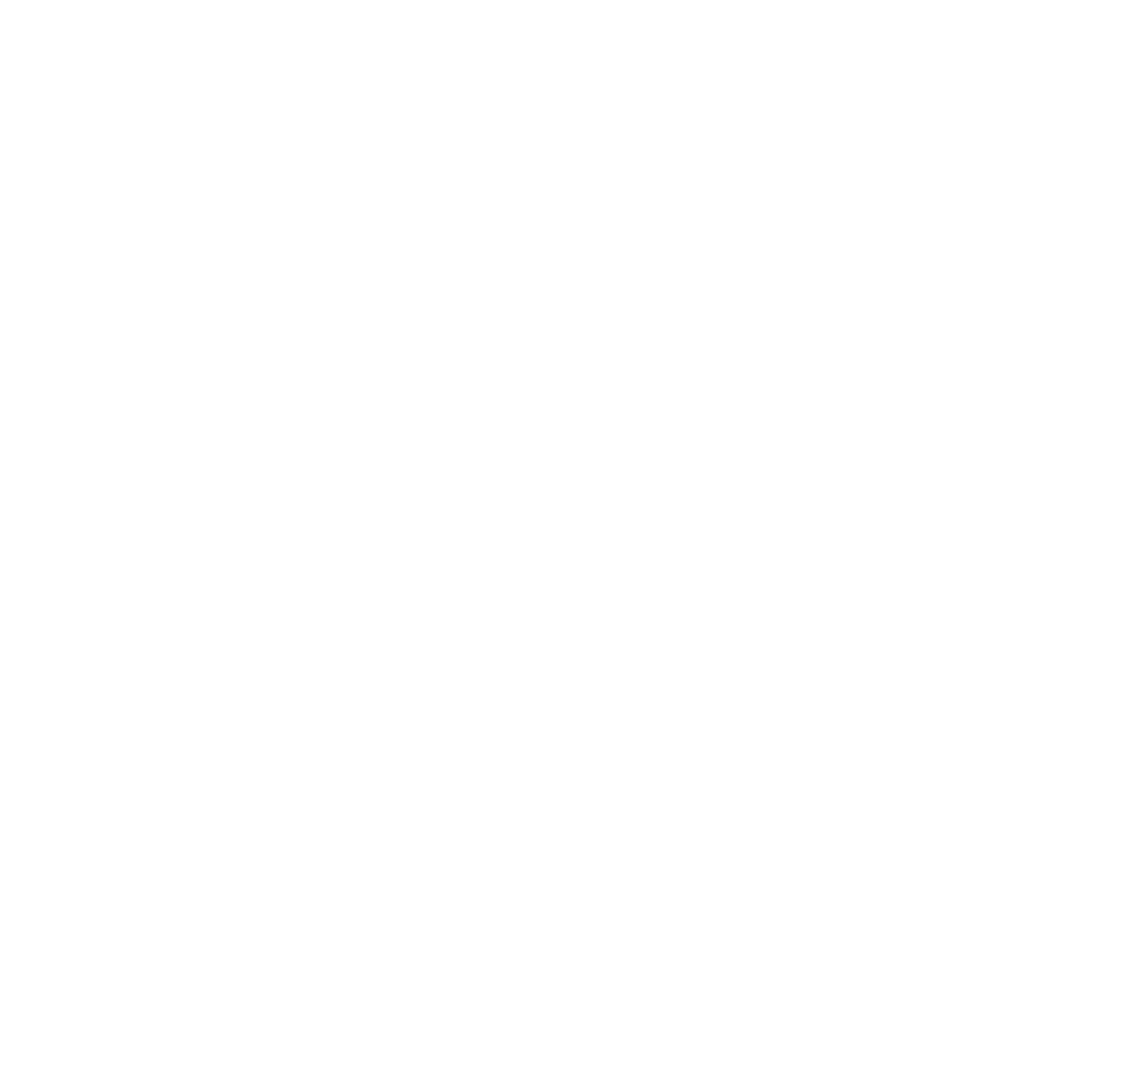 Schoolhouse Rock! 50th Anniversary Singalong logo